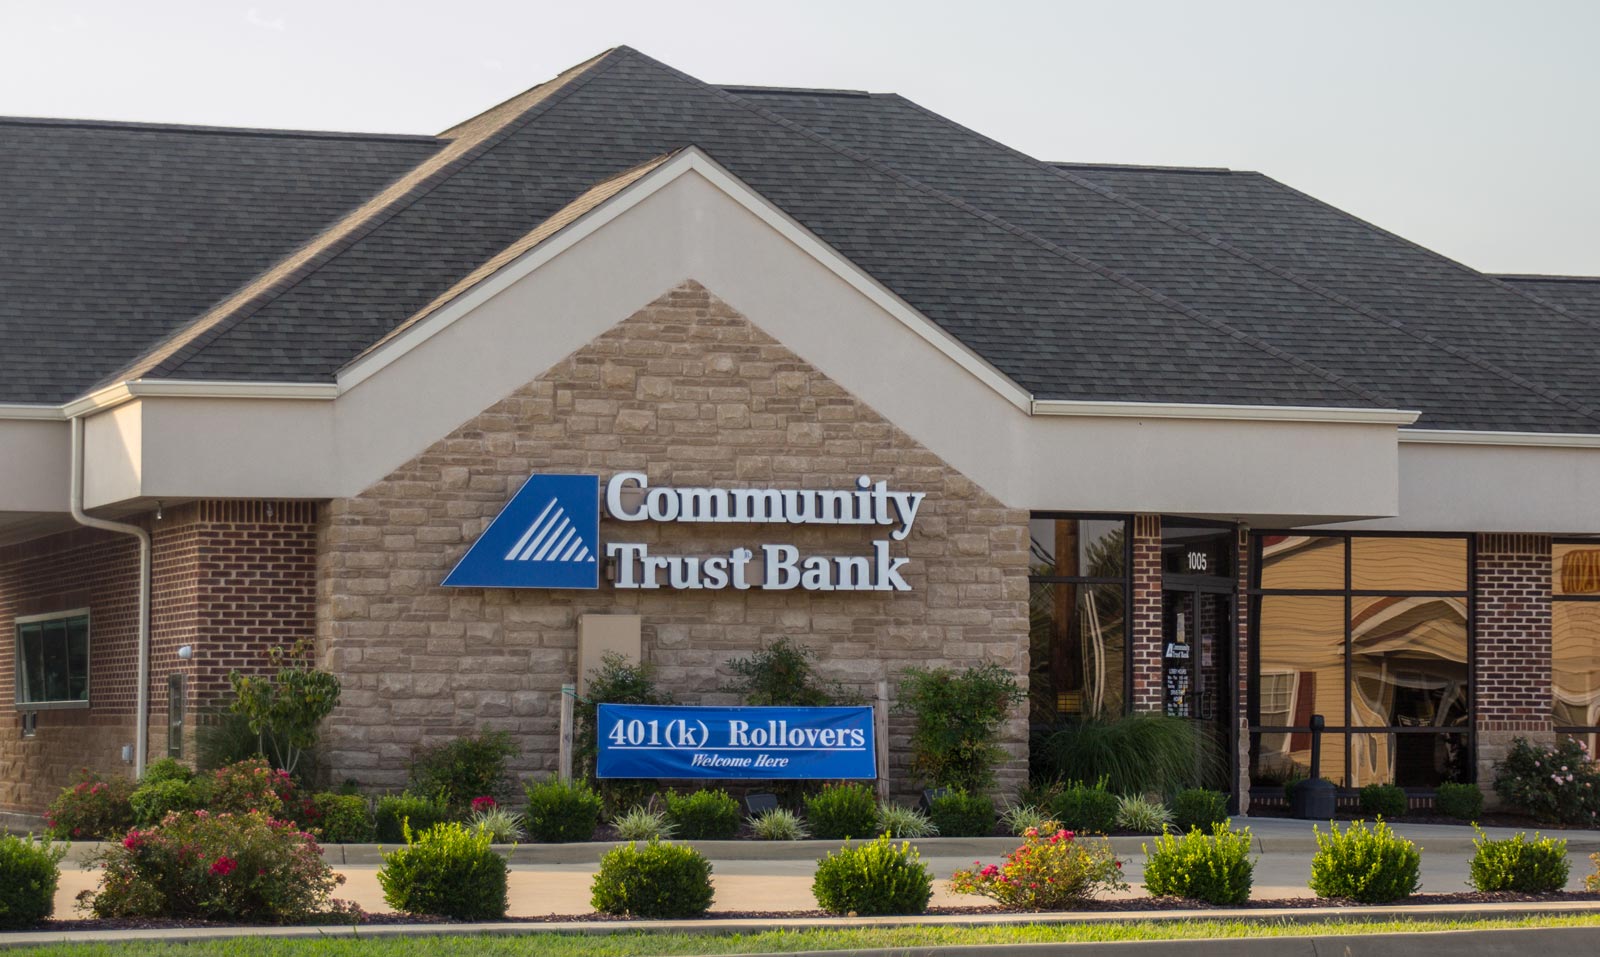 Community Trust Bank